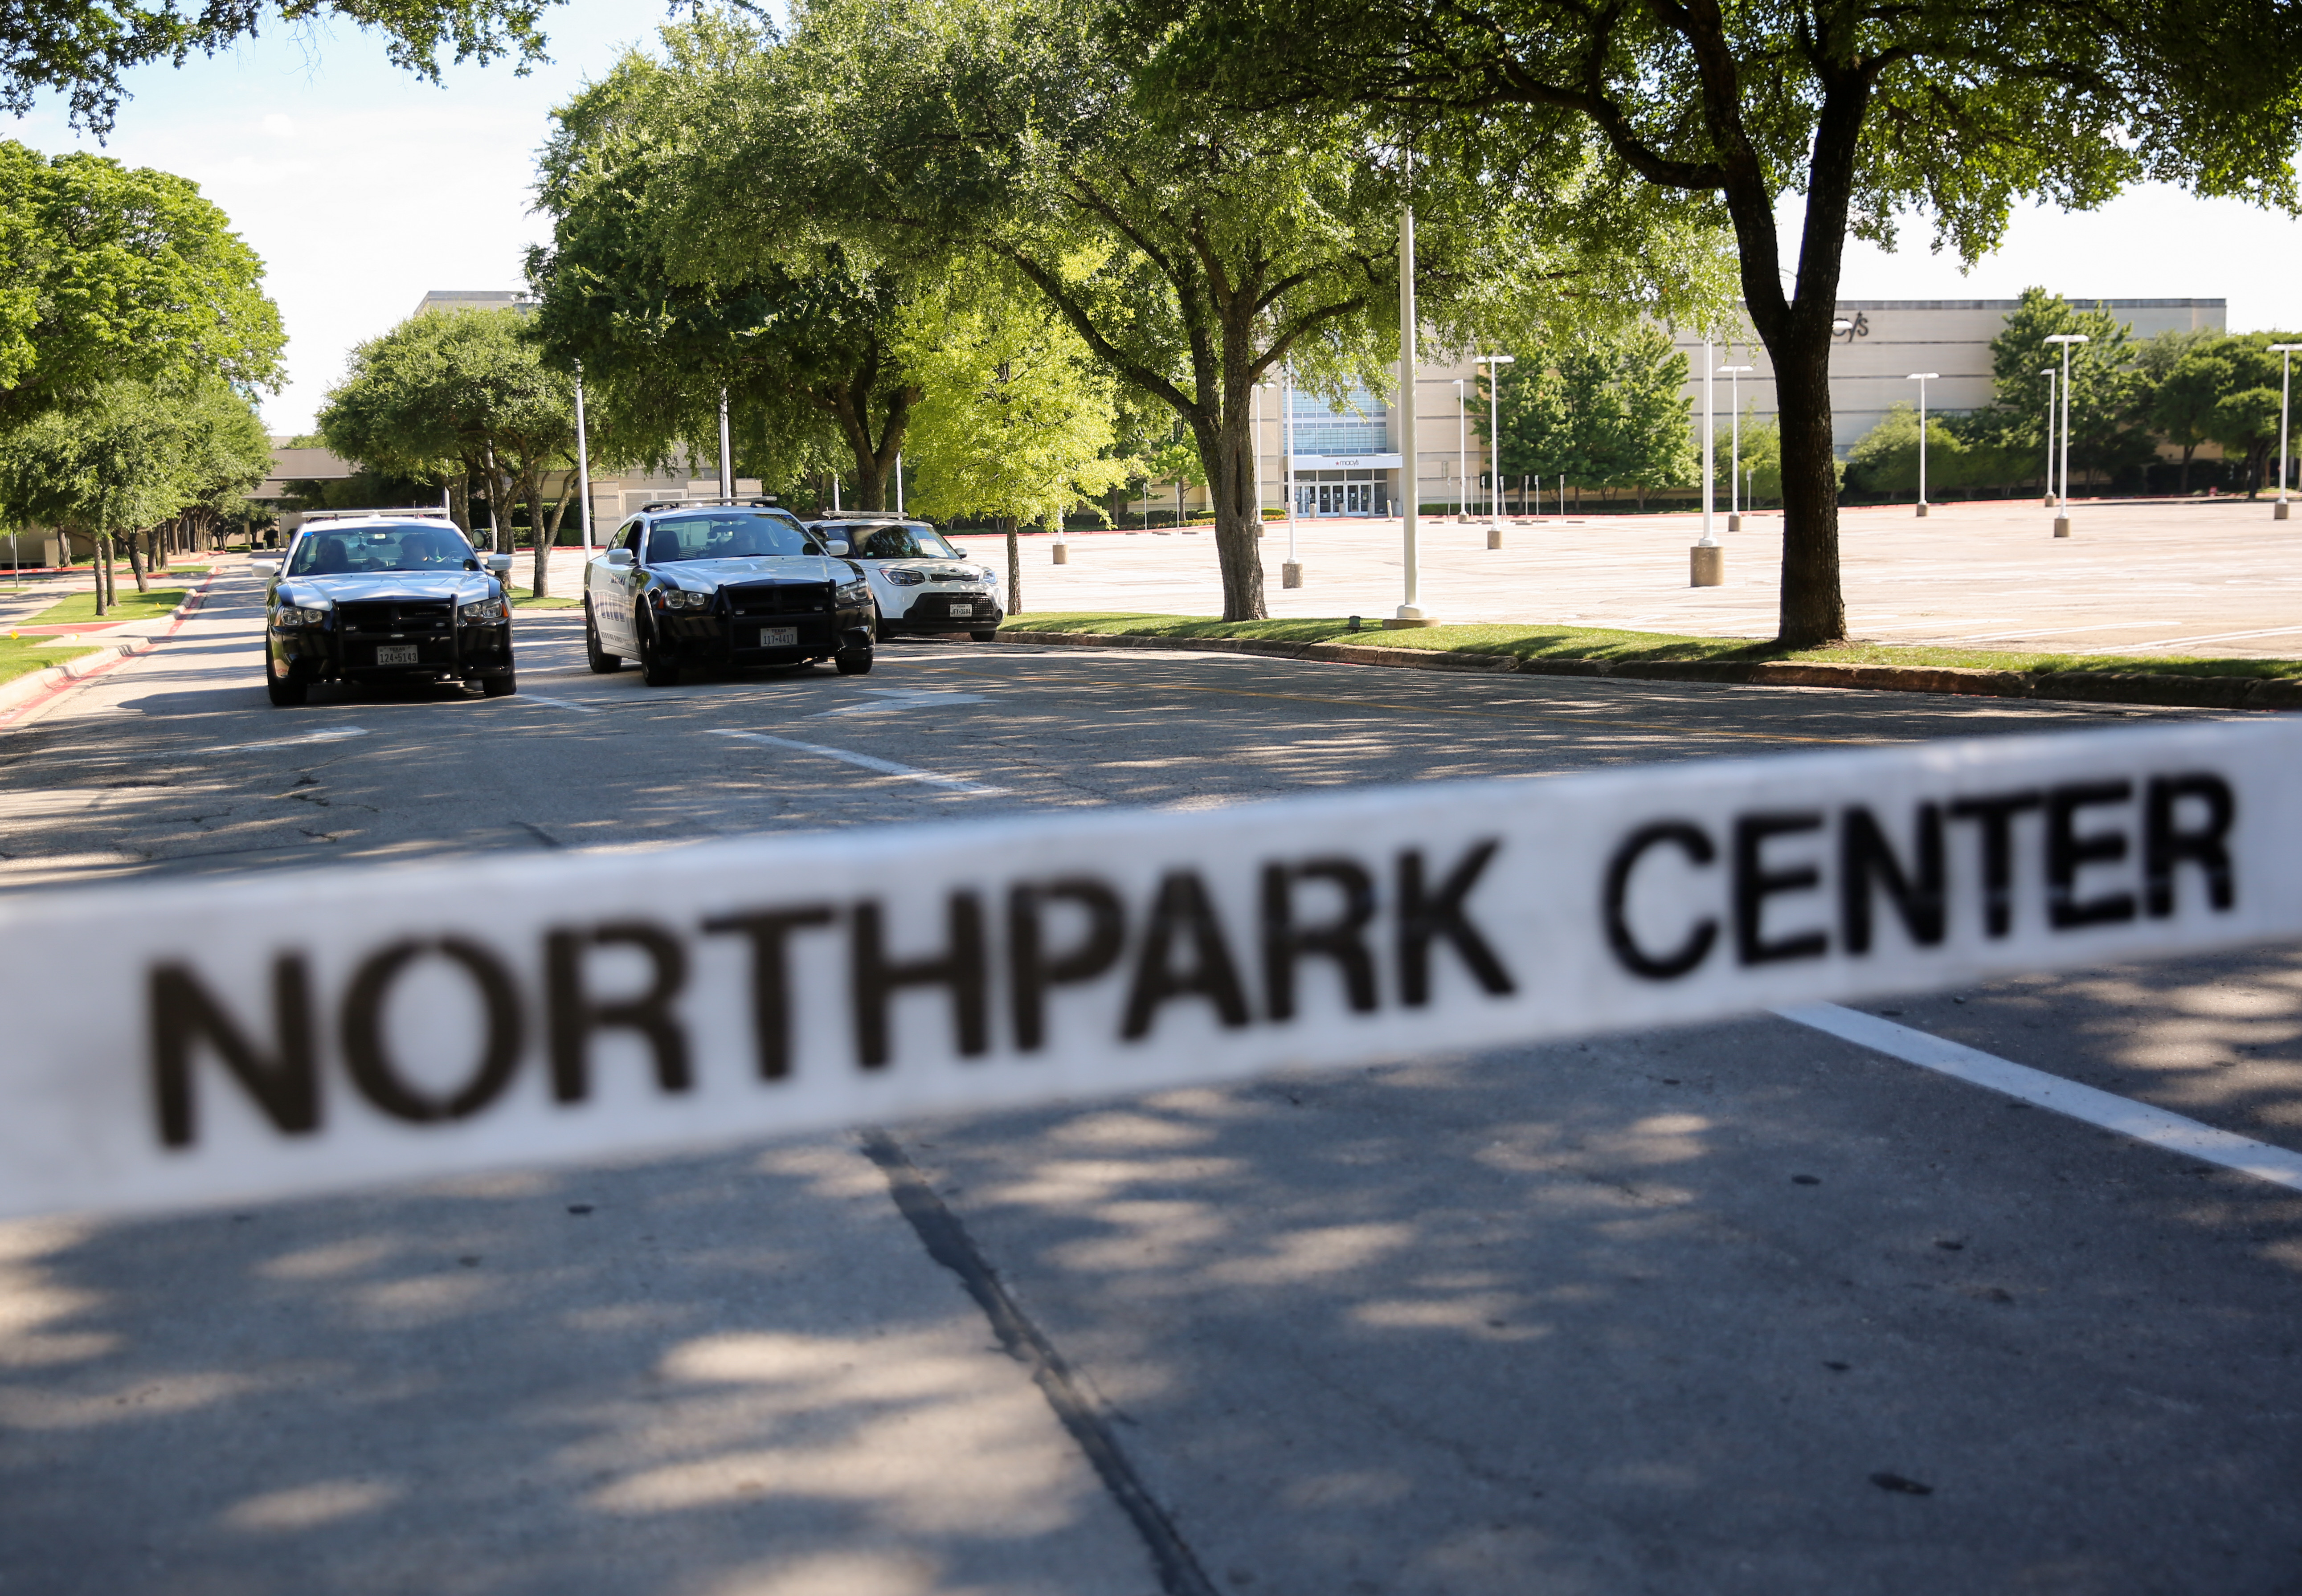 Hammering men at Northpark being taken down : r/Dallas